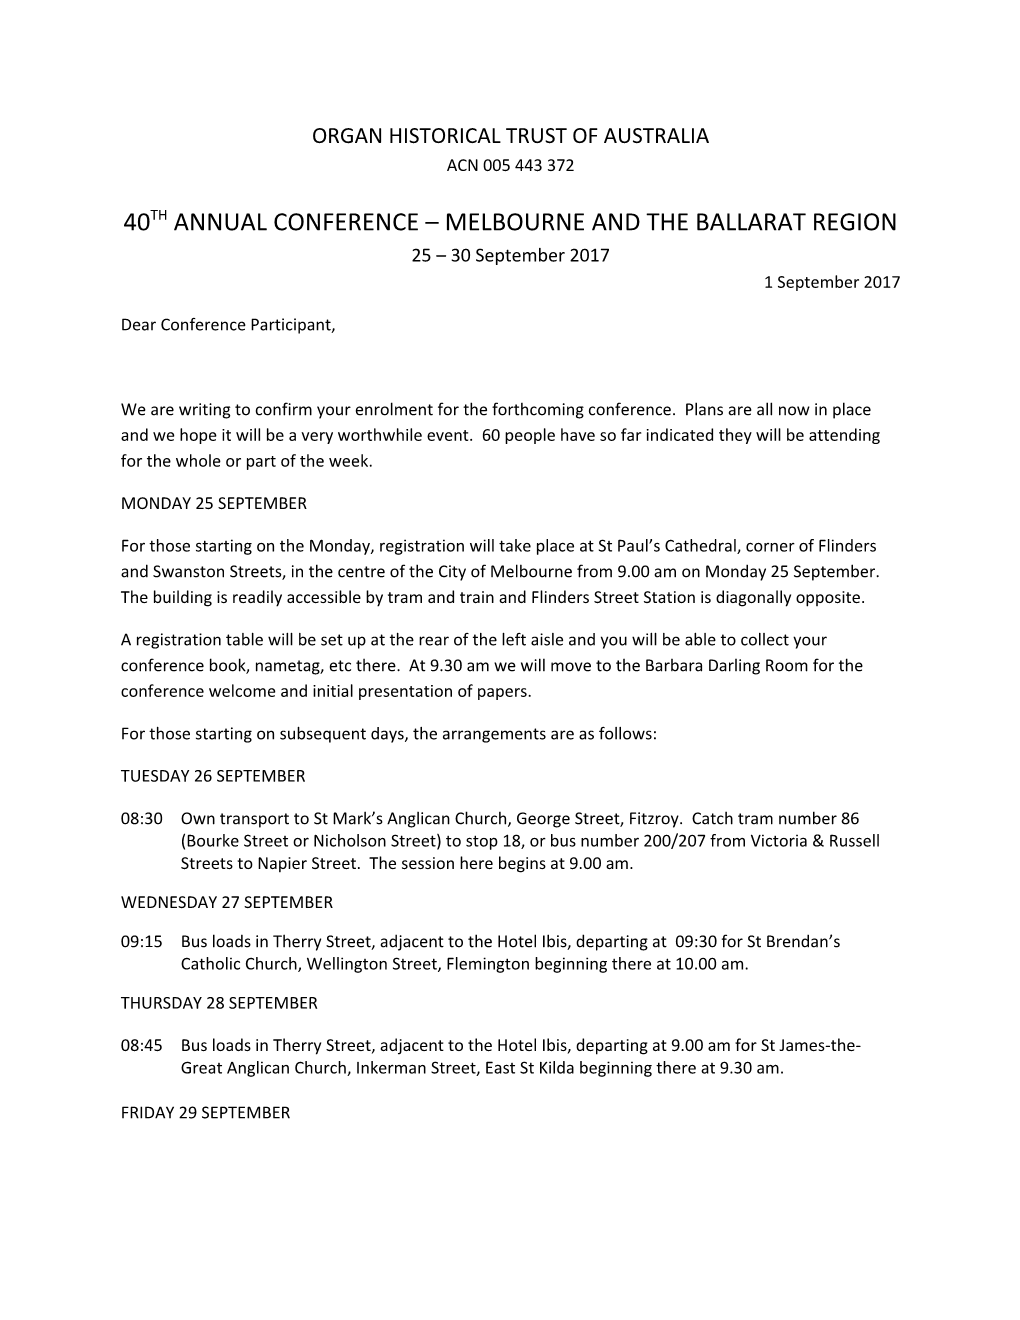 40Th Annual Conference Melbourne and the Ballarat Region